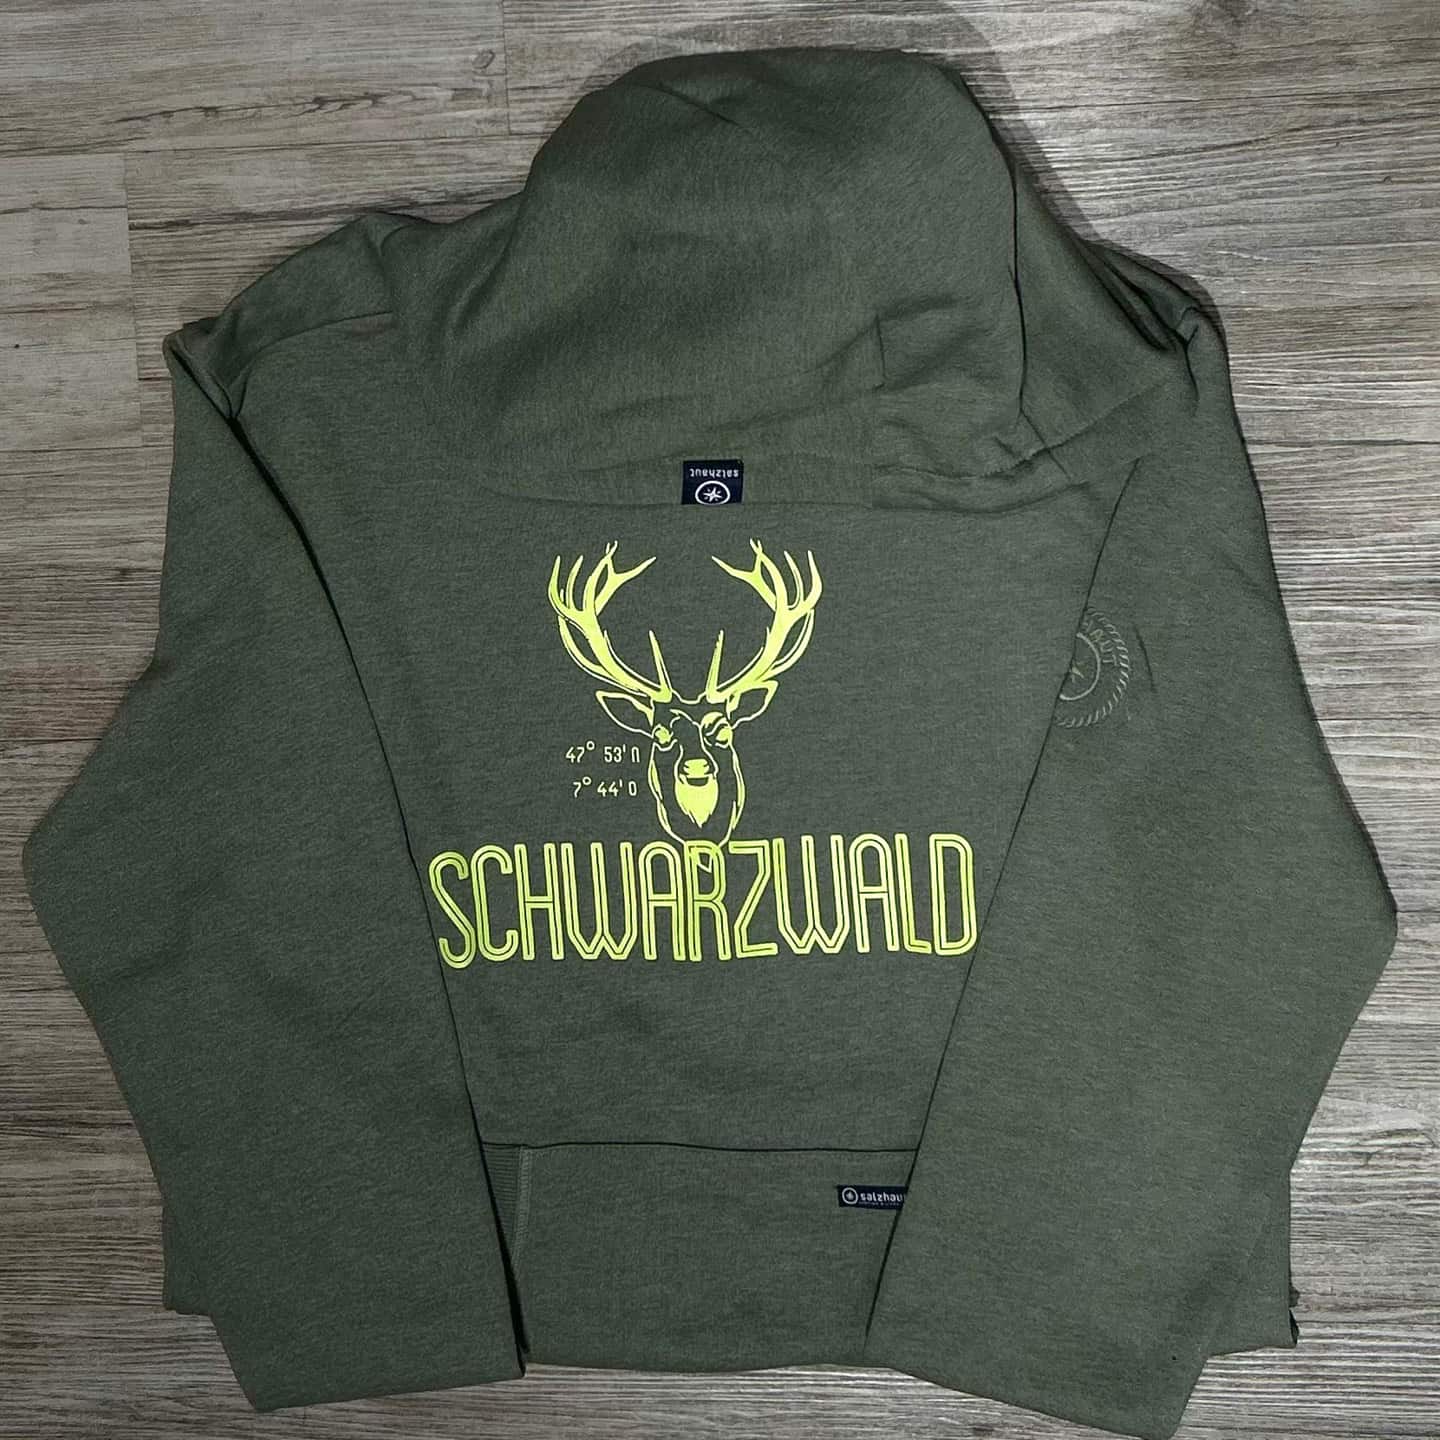 schwarzwald-hoodie-seagras-neongelb-pullover